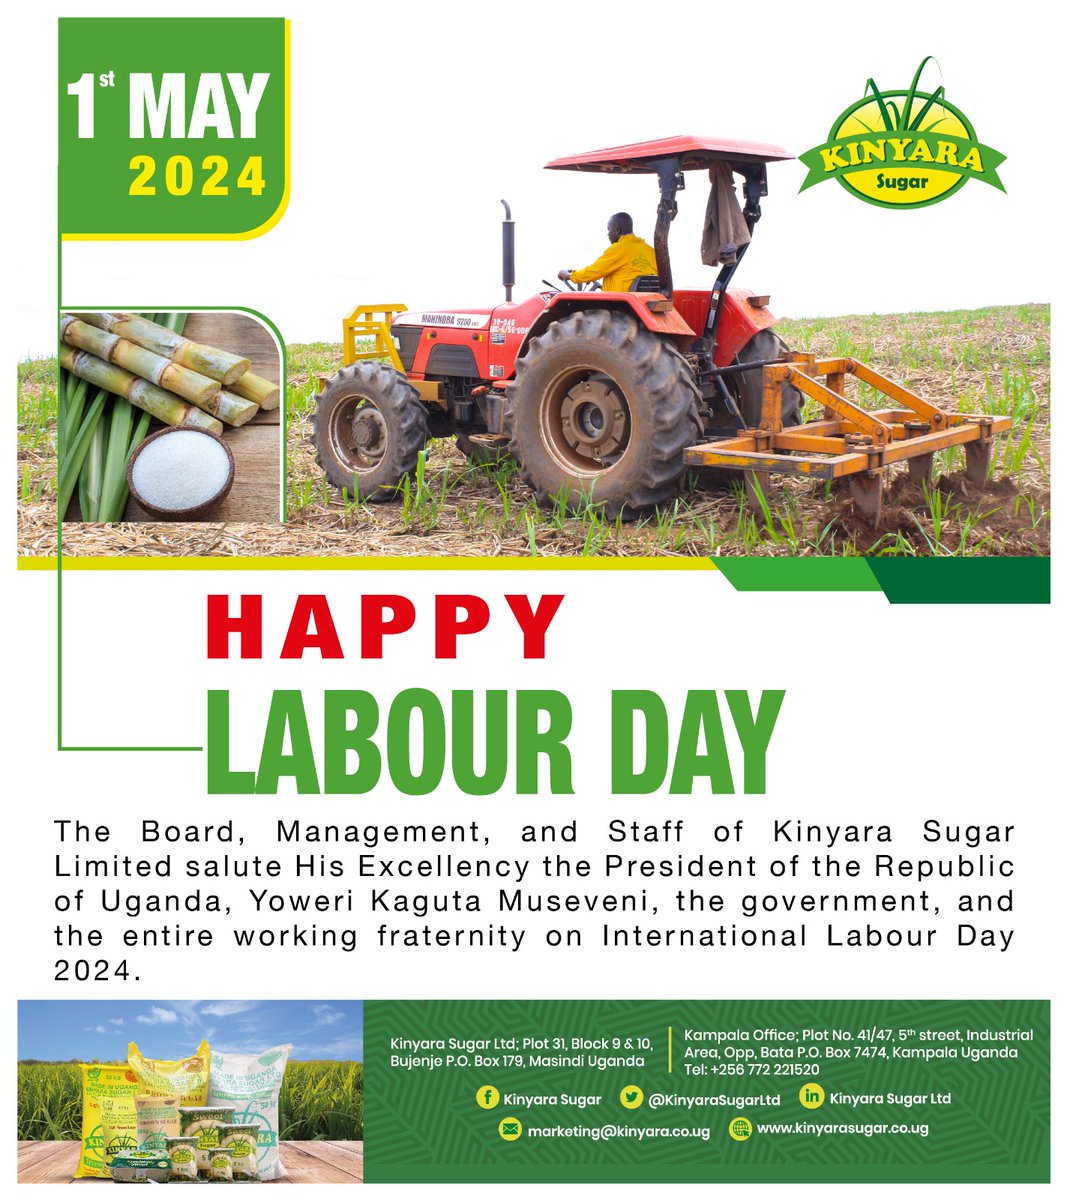 We wish you an #IrresistiblySweet Labour Day 2024 celebrations. #WeAreKinyaraSugar #KinyaraSugarLtd #LabourDay